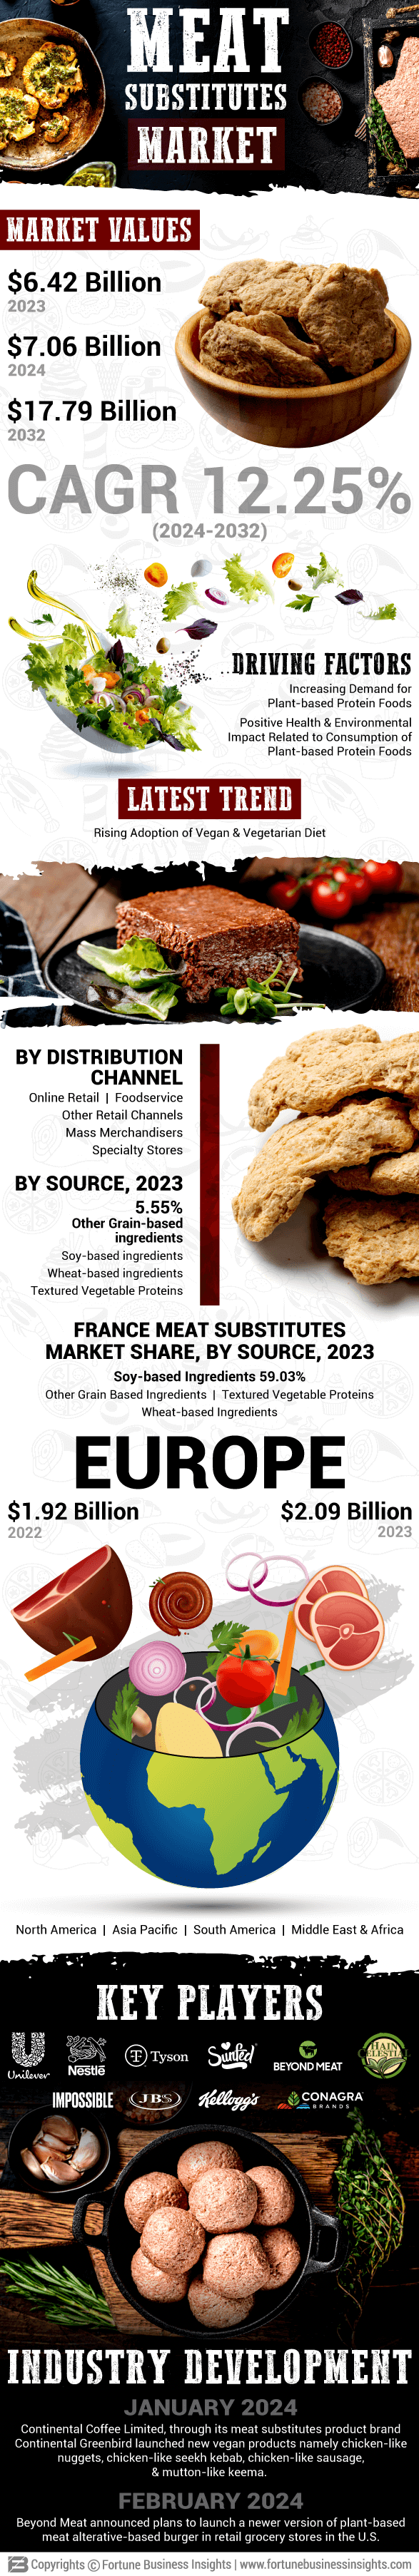 Meat Substitutes Market